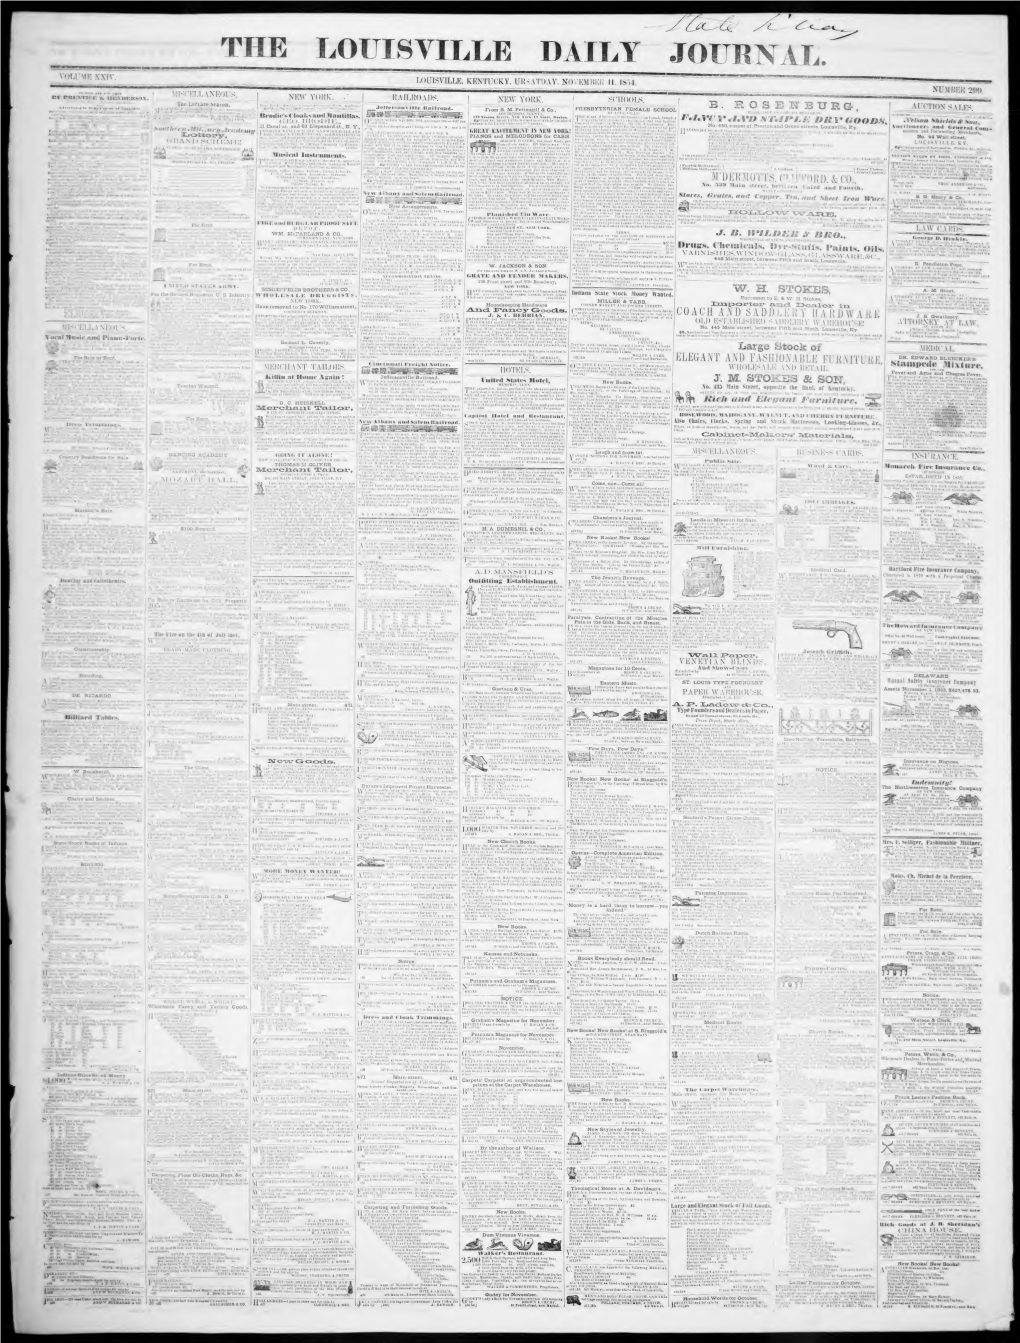 Louisville Daily Journal (Louisville, Ky. : 1833): 1854-11-11